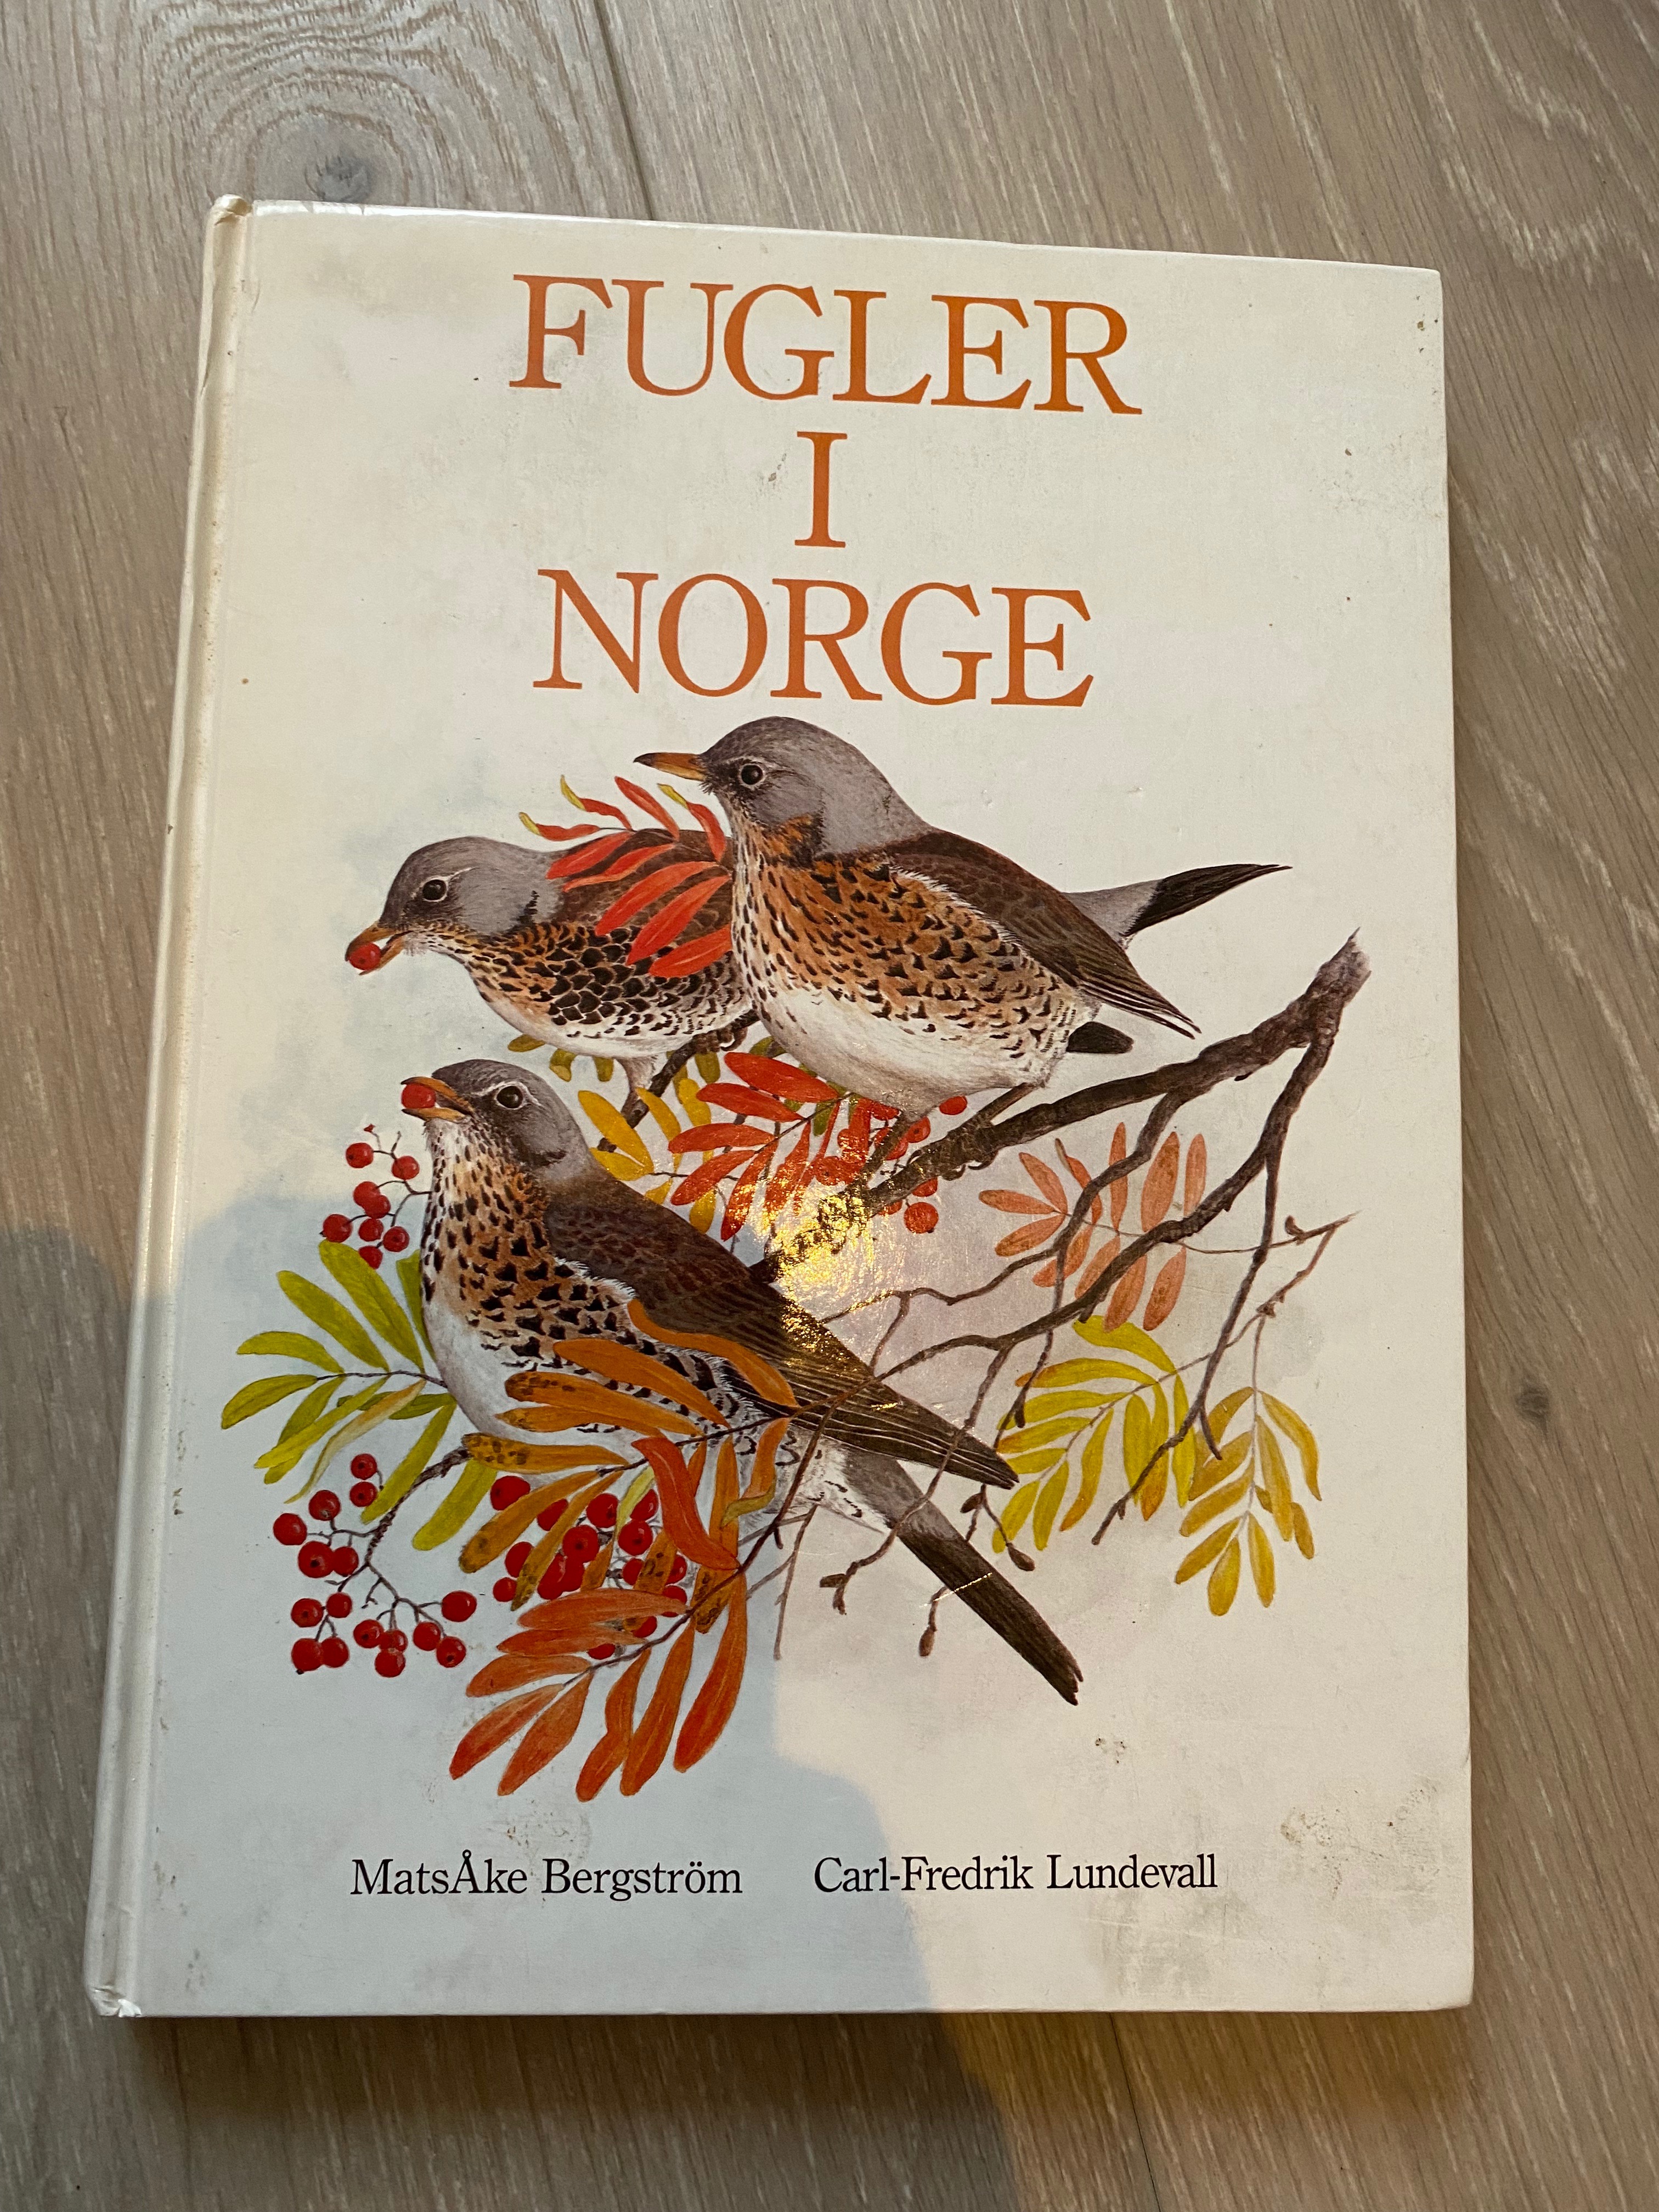 Fugler i Norge